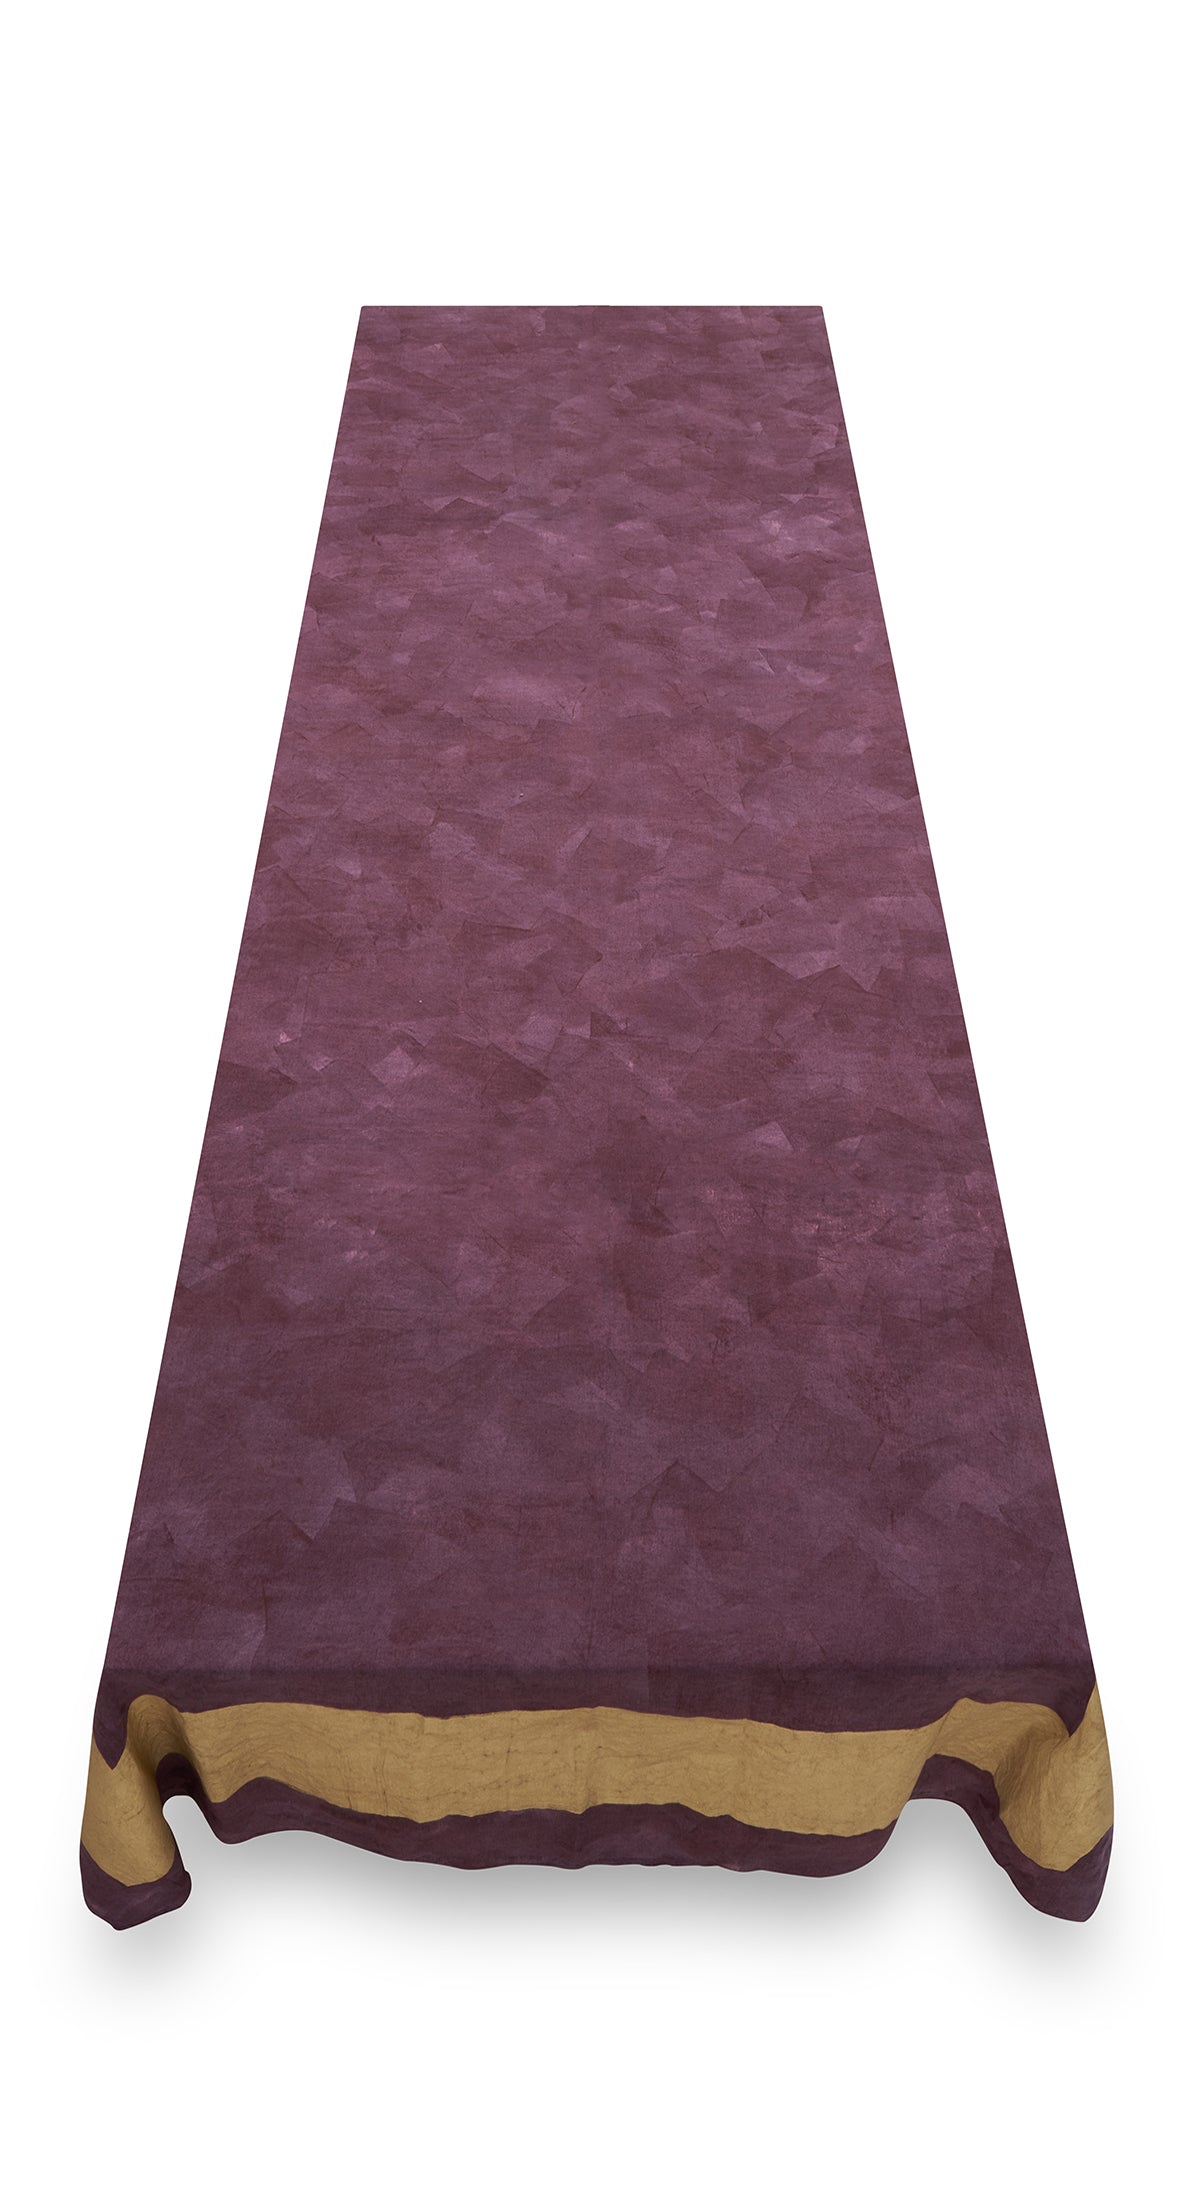 Full Field Cornice Linen Tablecloth in Grape Purple & Gold